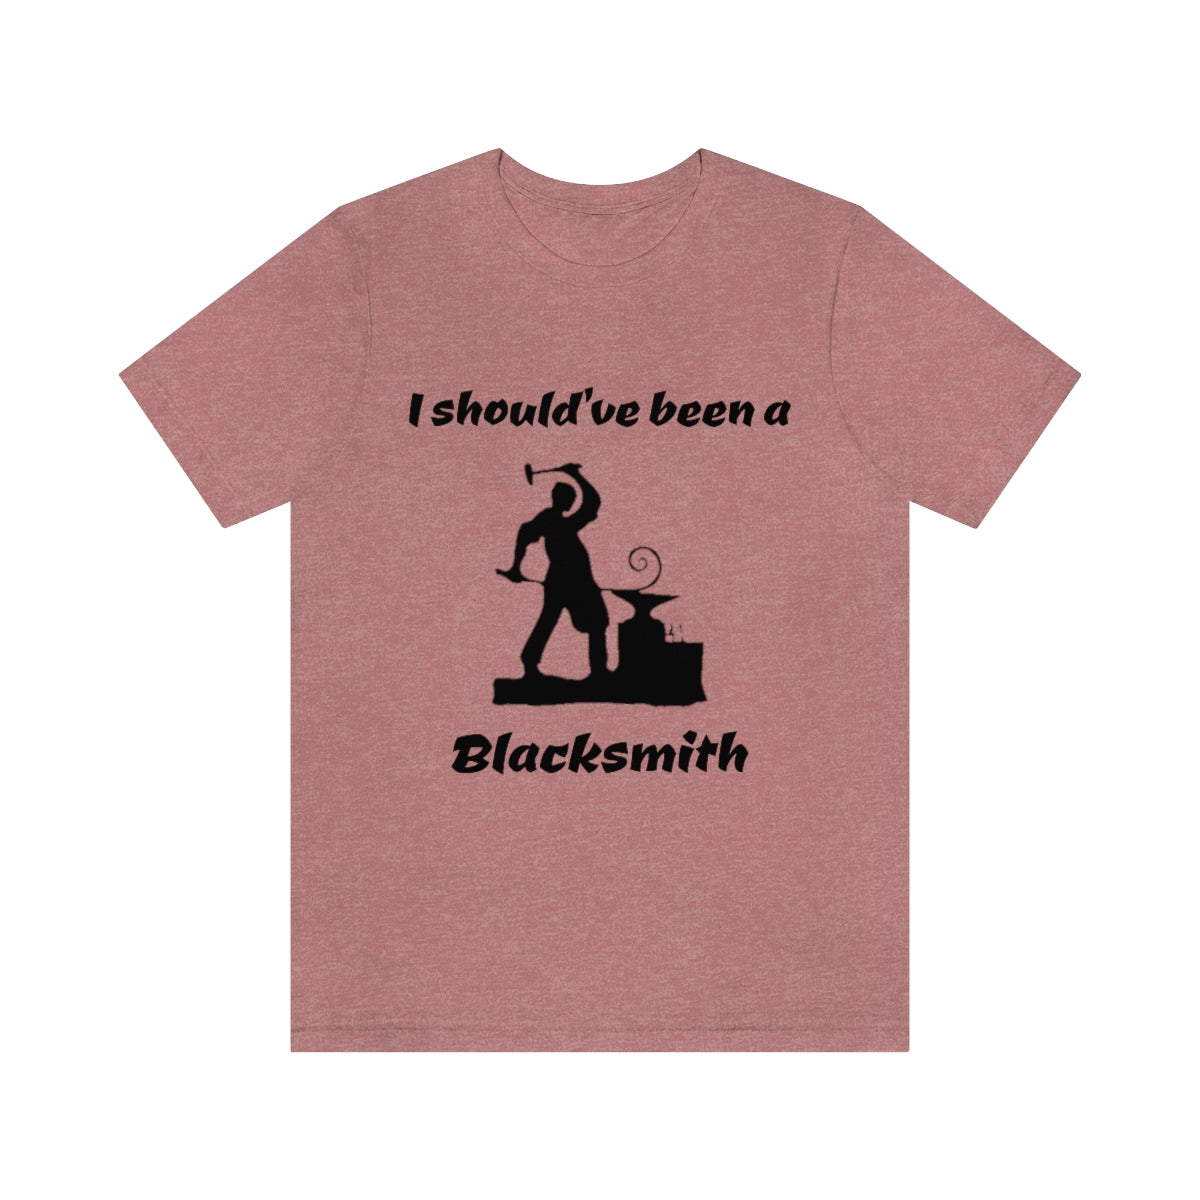 I should've been a Blacksmith - Funny - Unisex Short Sleeve Tee